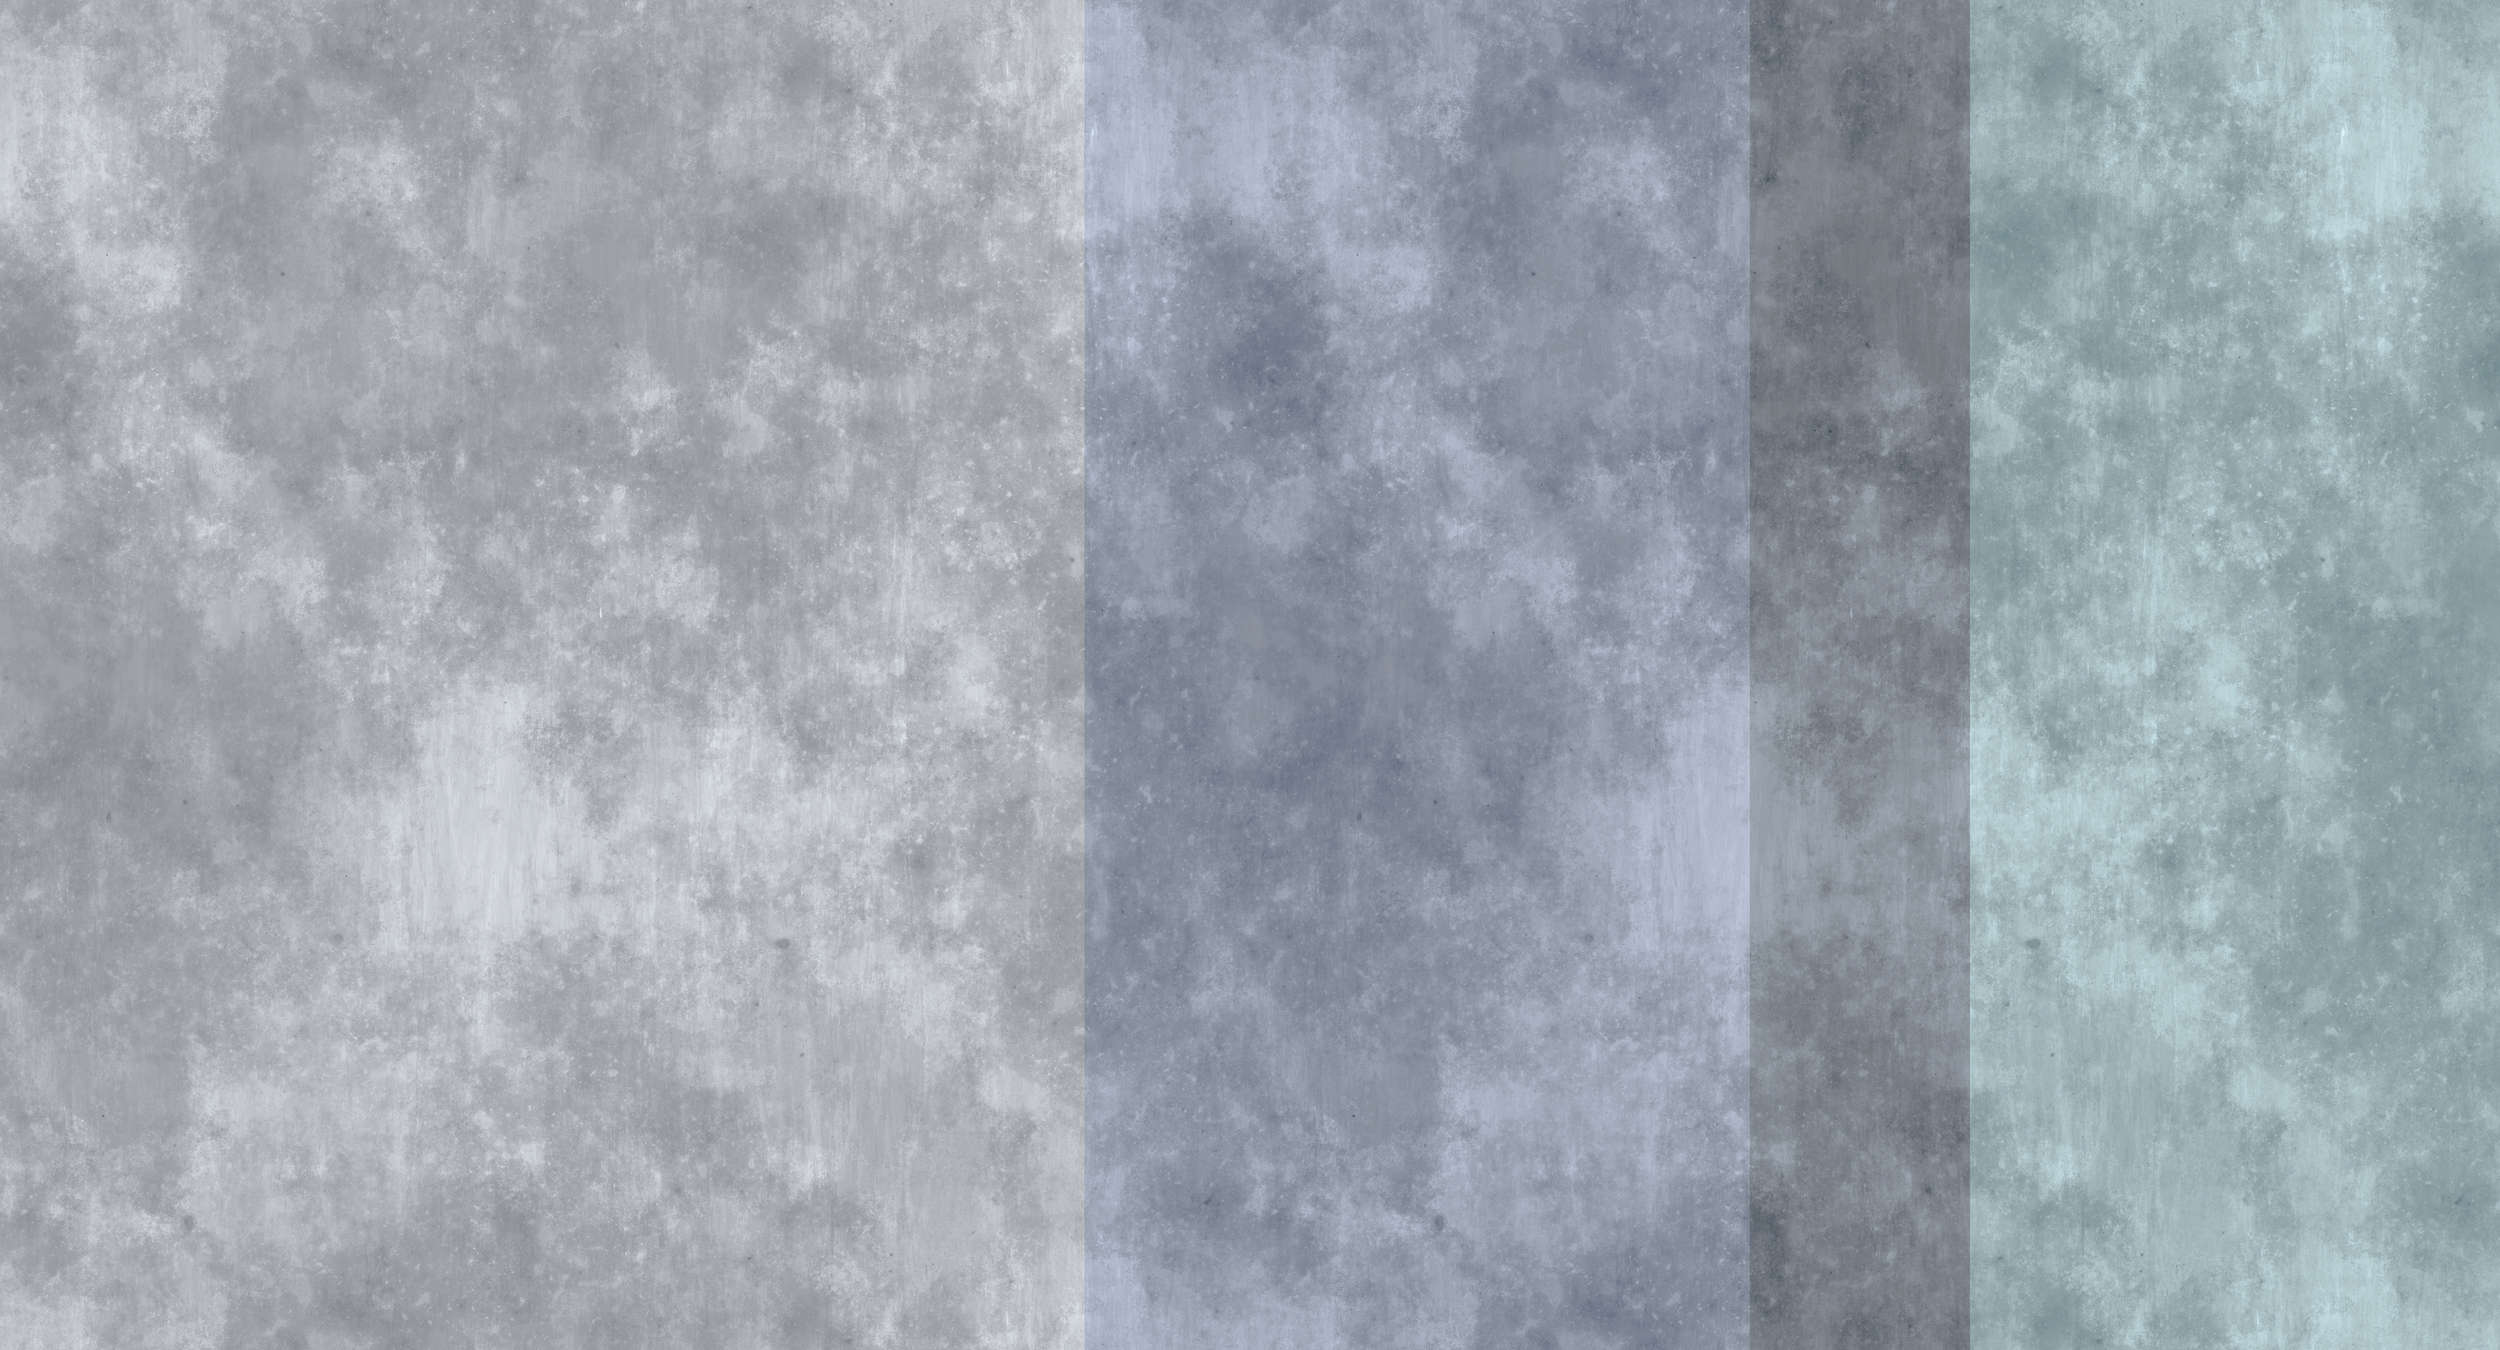             Papier peint à rayures imitation béton - gris, bleu
        